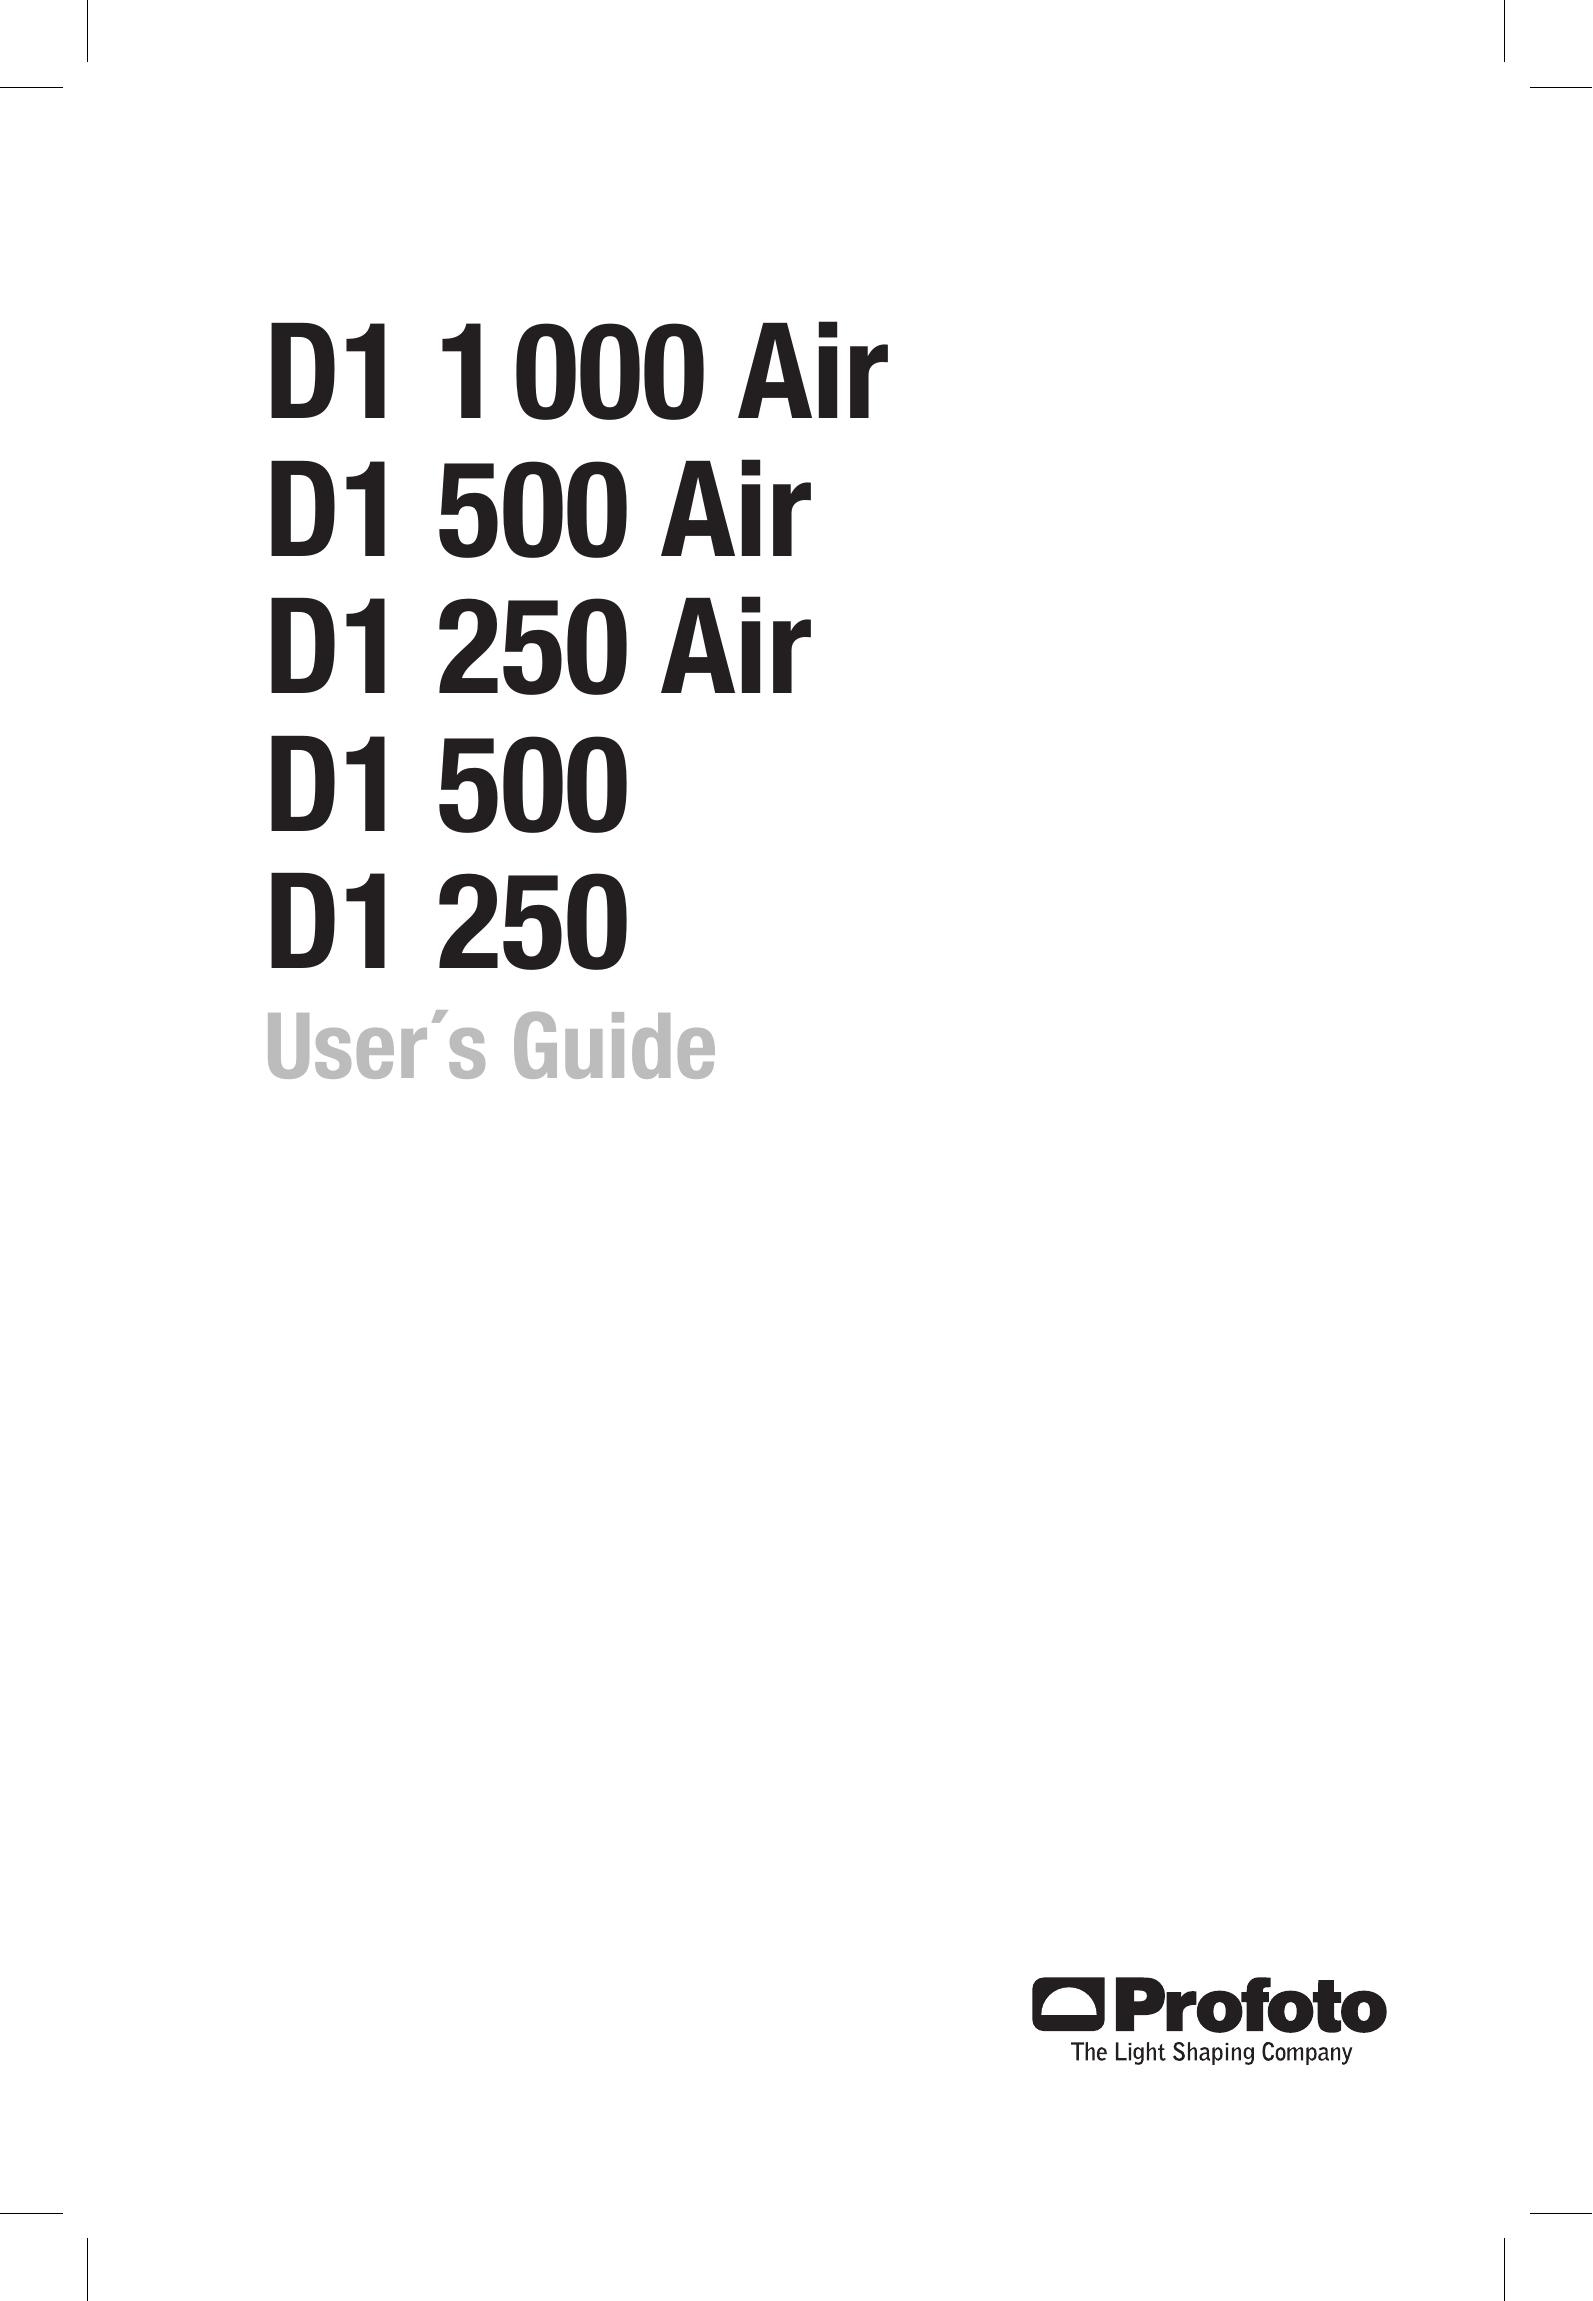 Profoto D1 1000 AIR Camera Accessories User Manual